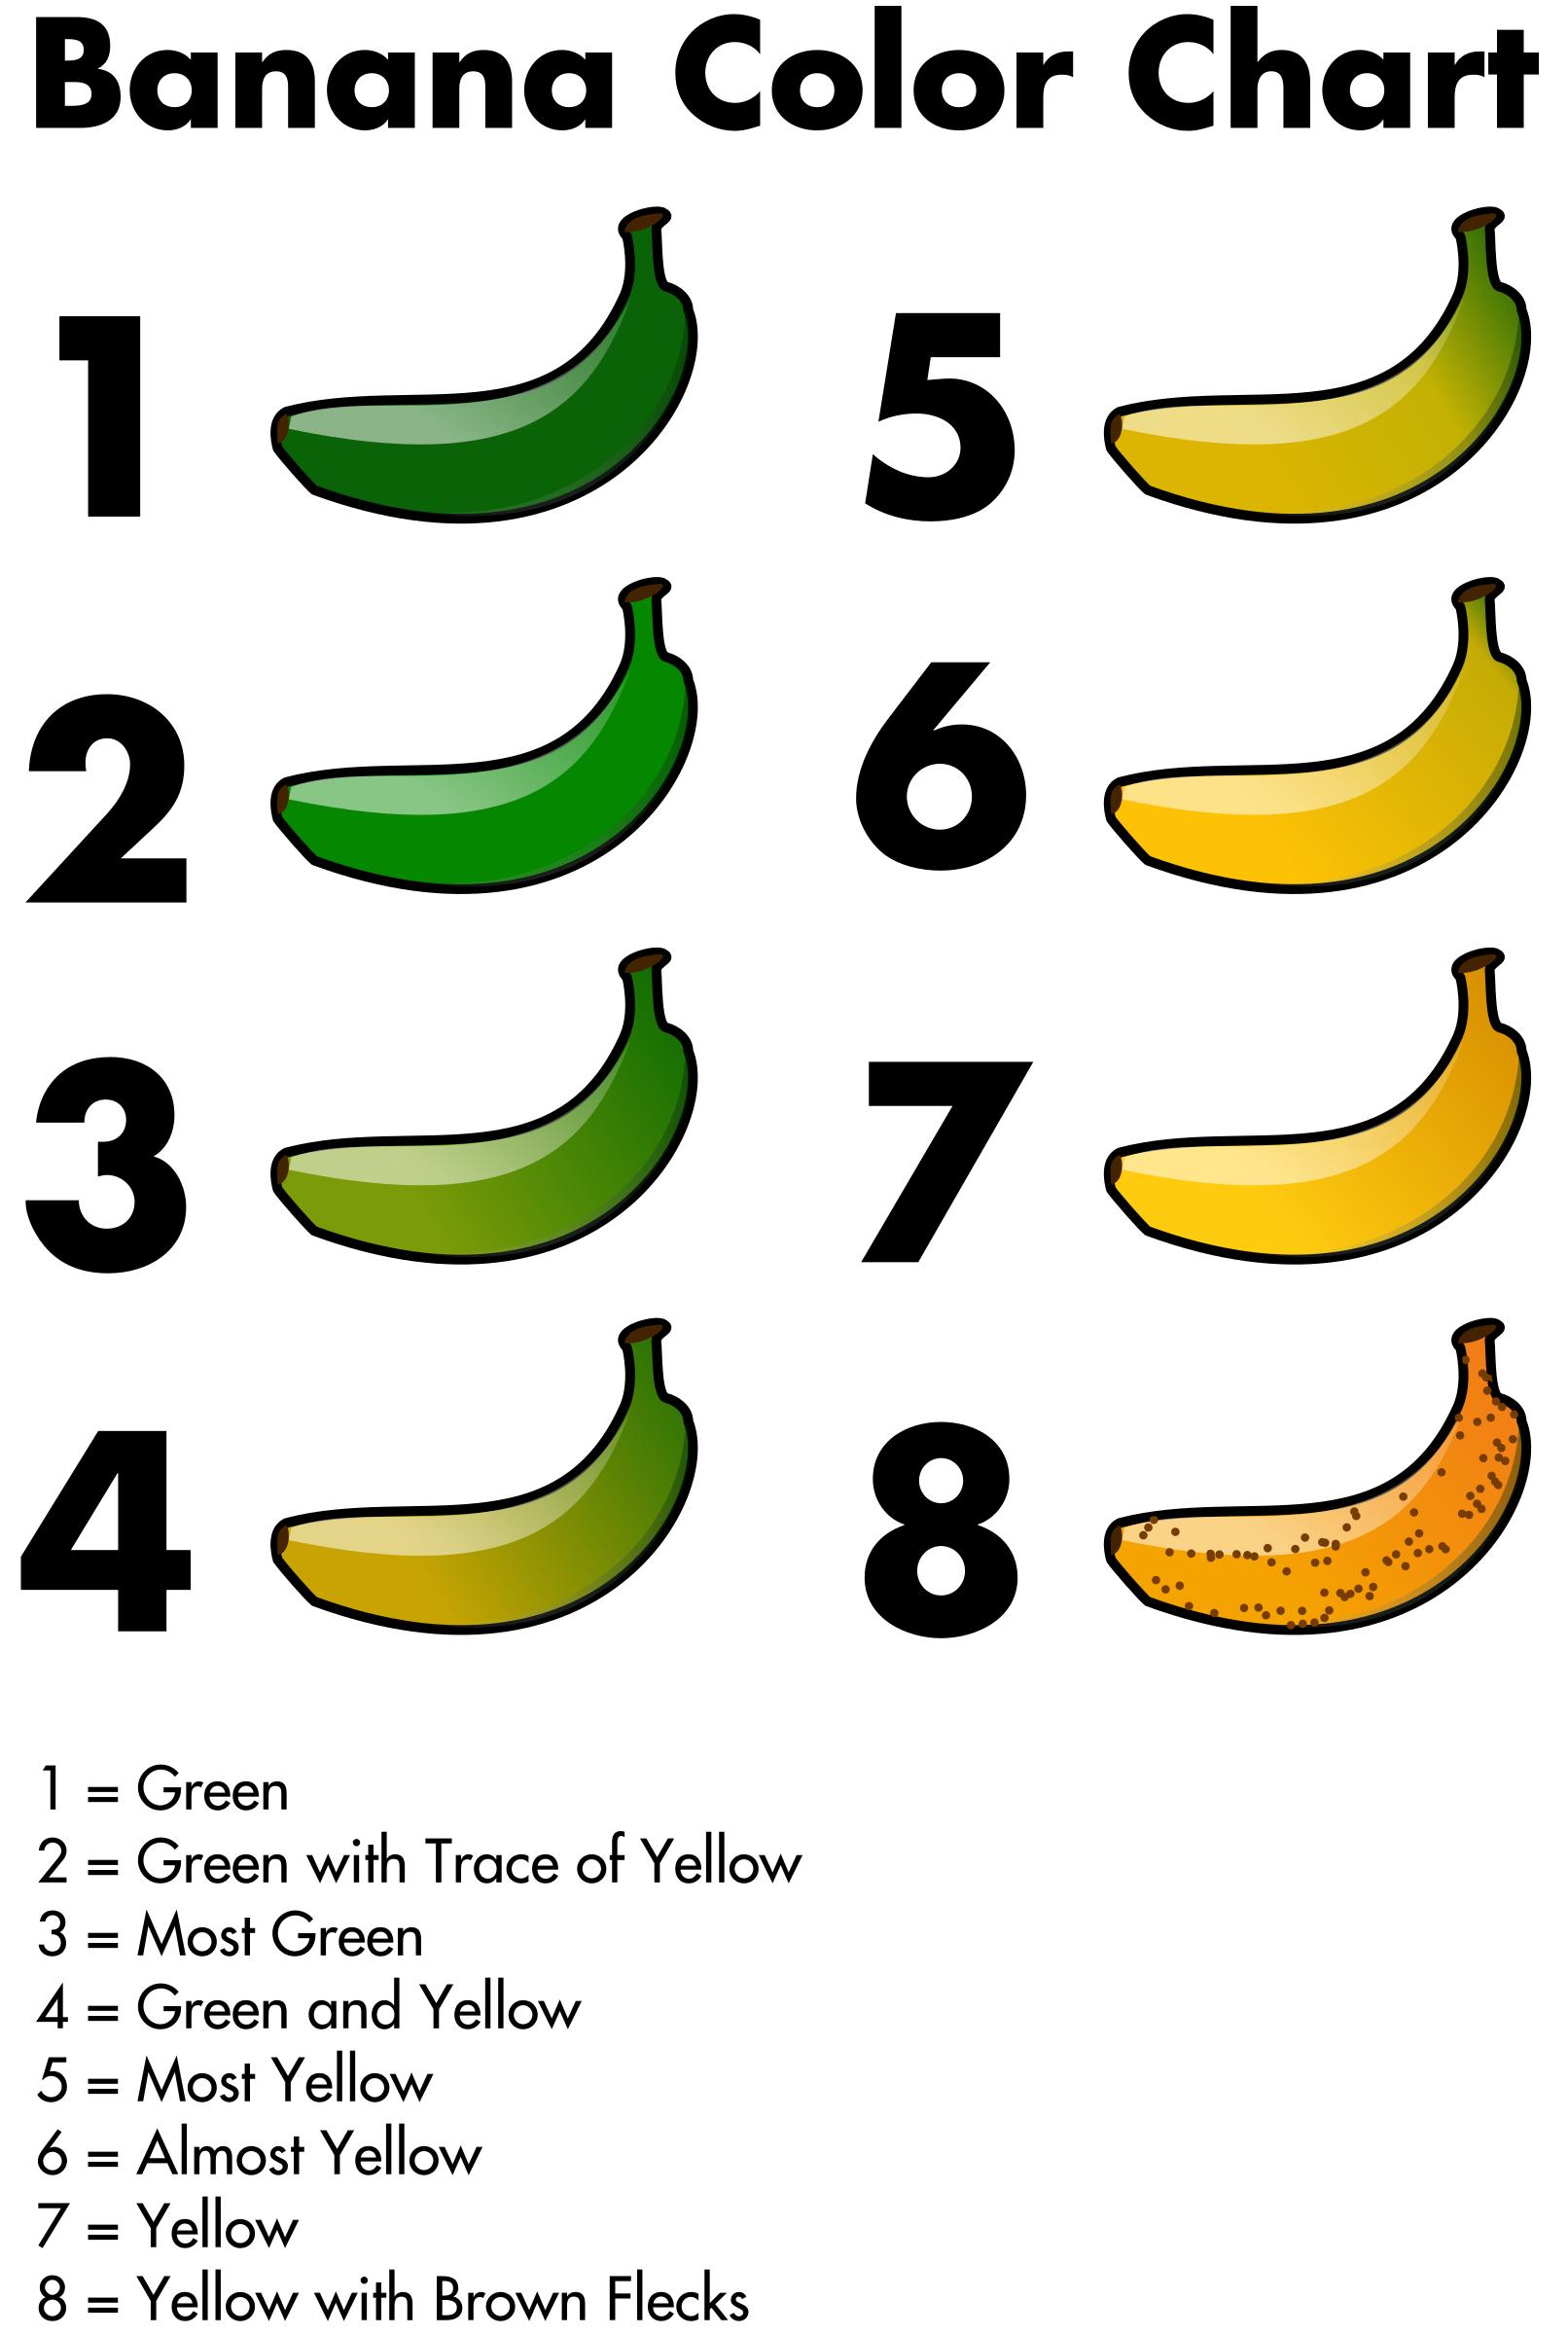 Banana Color Chart PNG icons